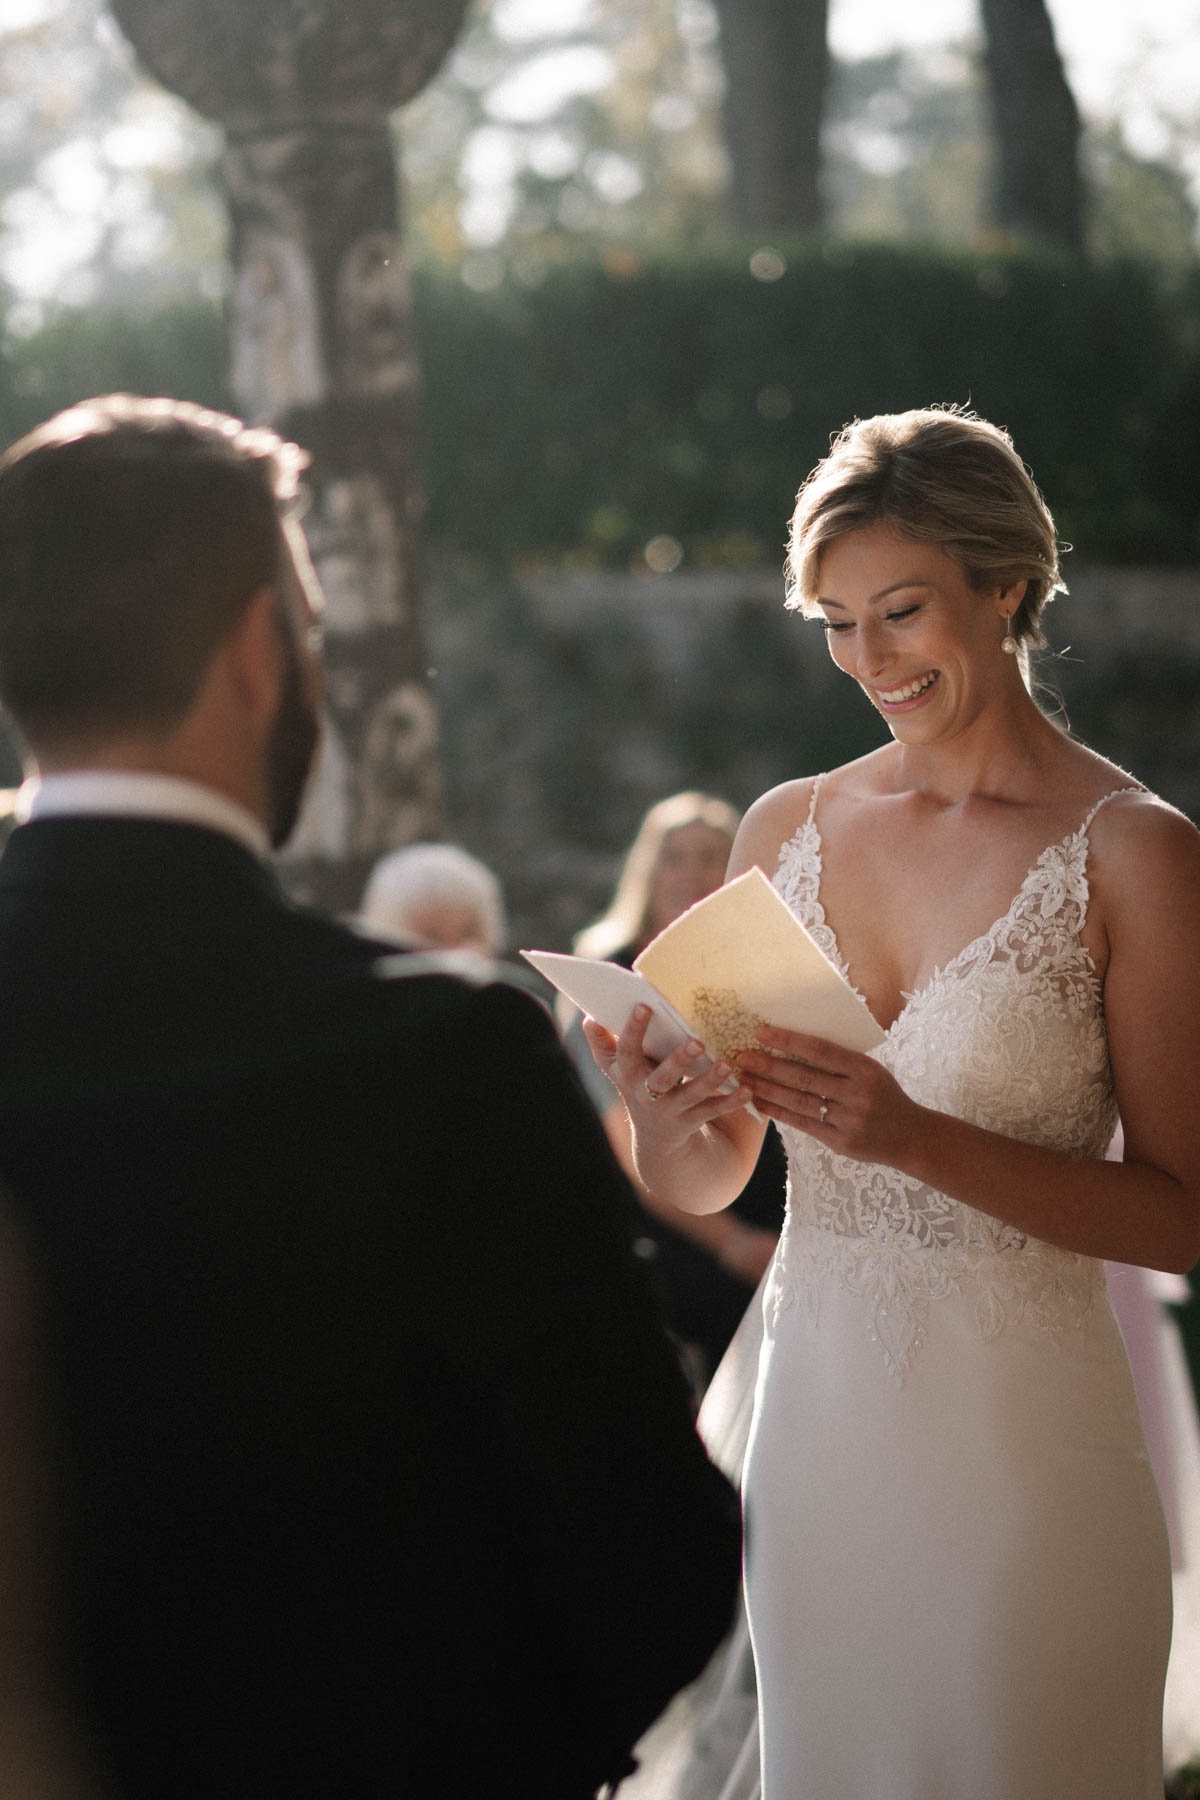 Melanie reading her personal vows at their Villa Cimbrone Wedding